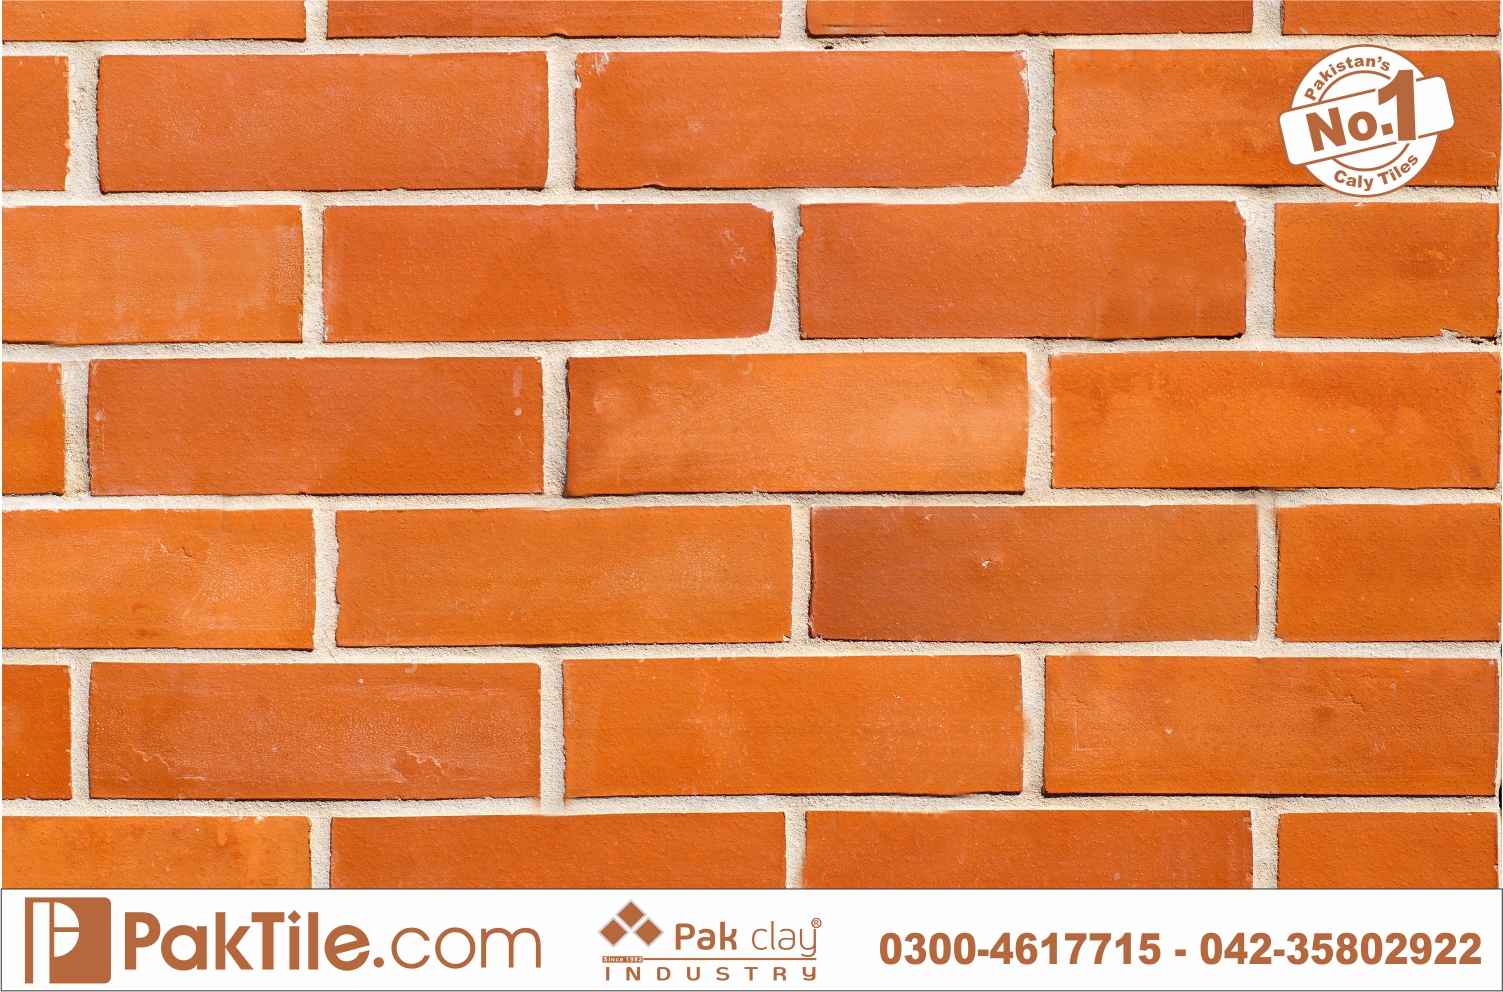 15 outdoor brick tiles brick cladding tiles brick tiles for interior walls prices images